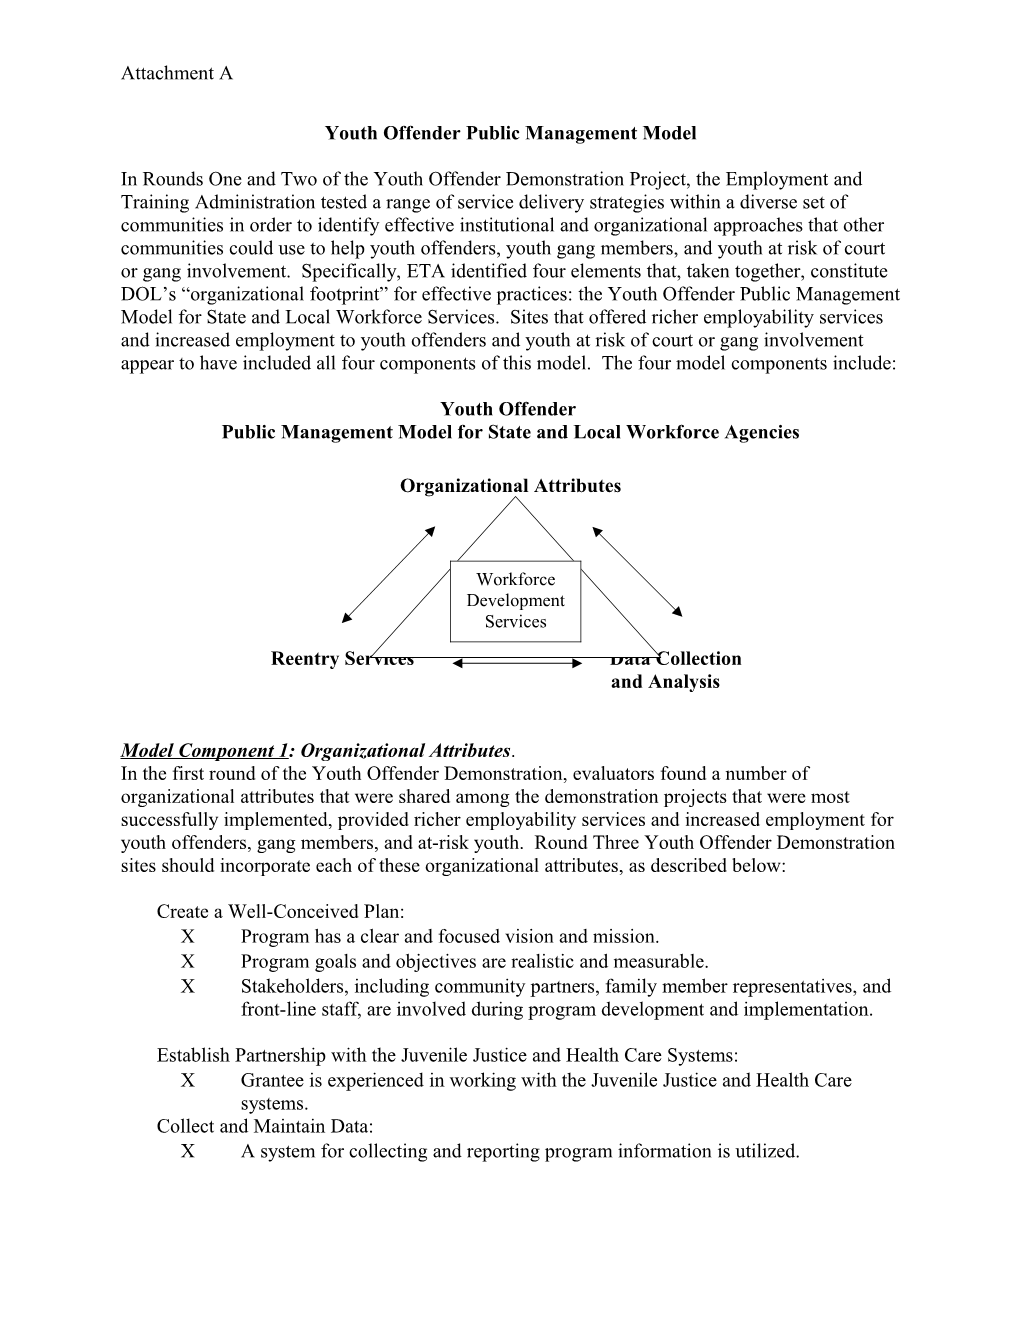 Model Component 1: Organizational Attributes